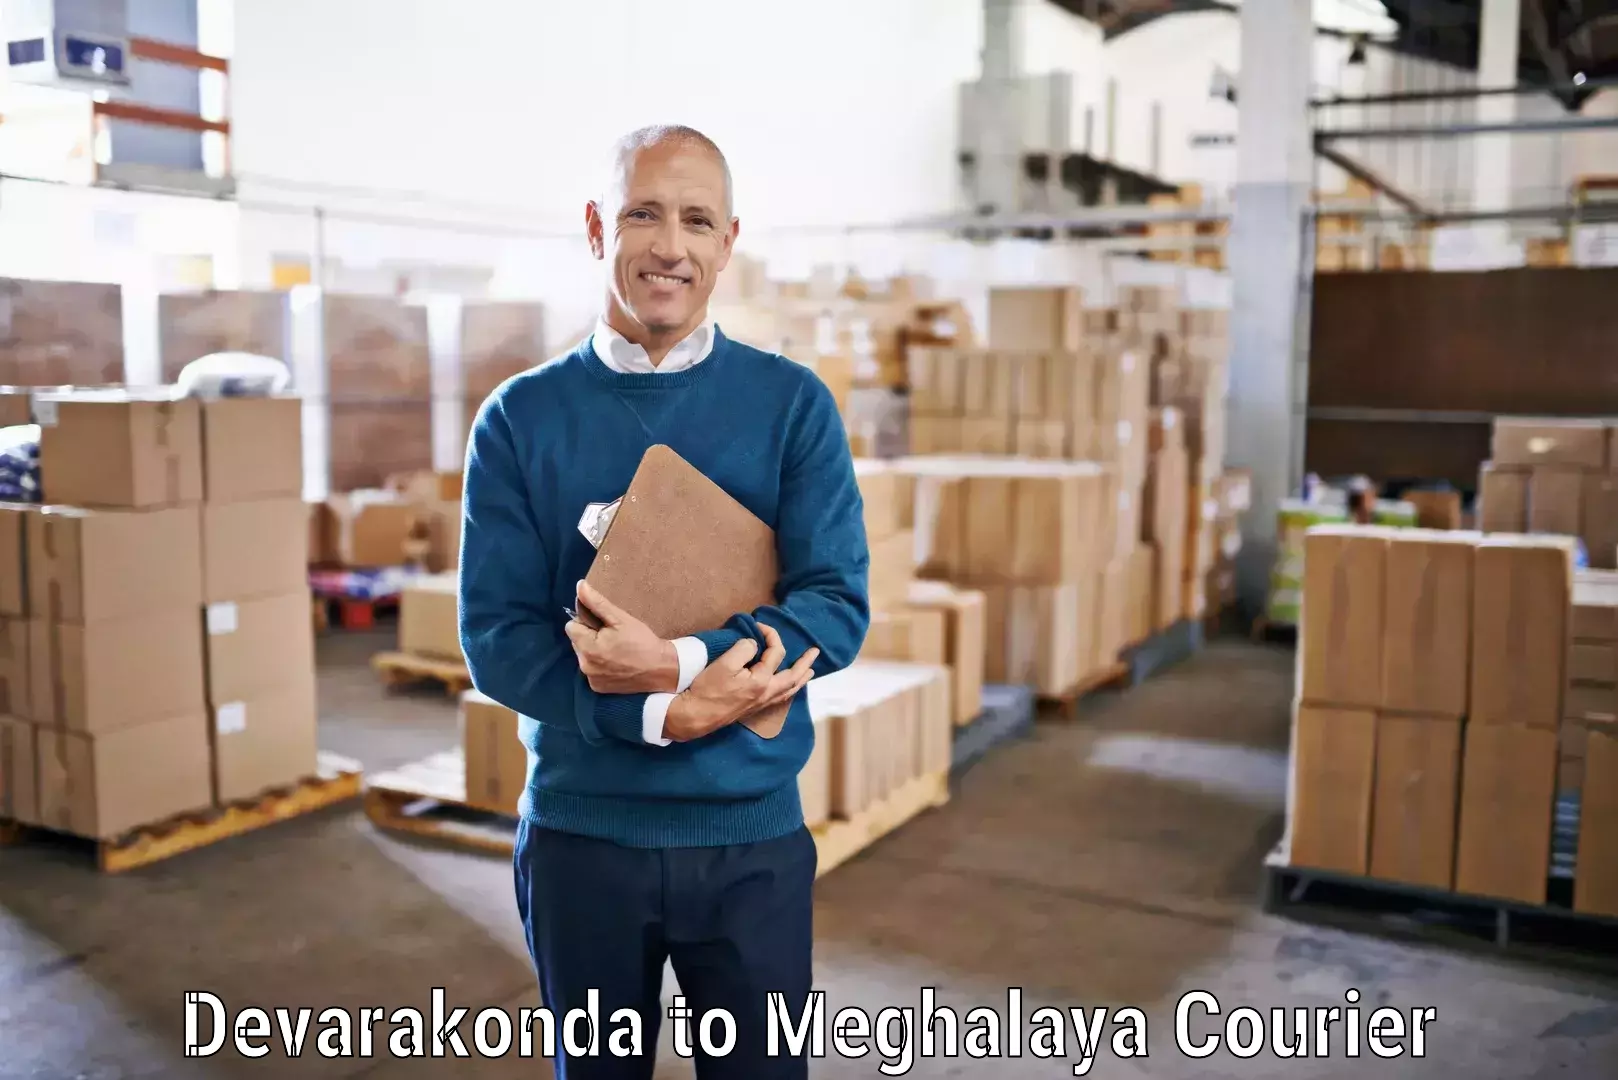 Courier service innovation Devarakonda to Meghalaya